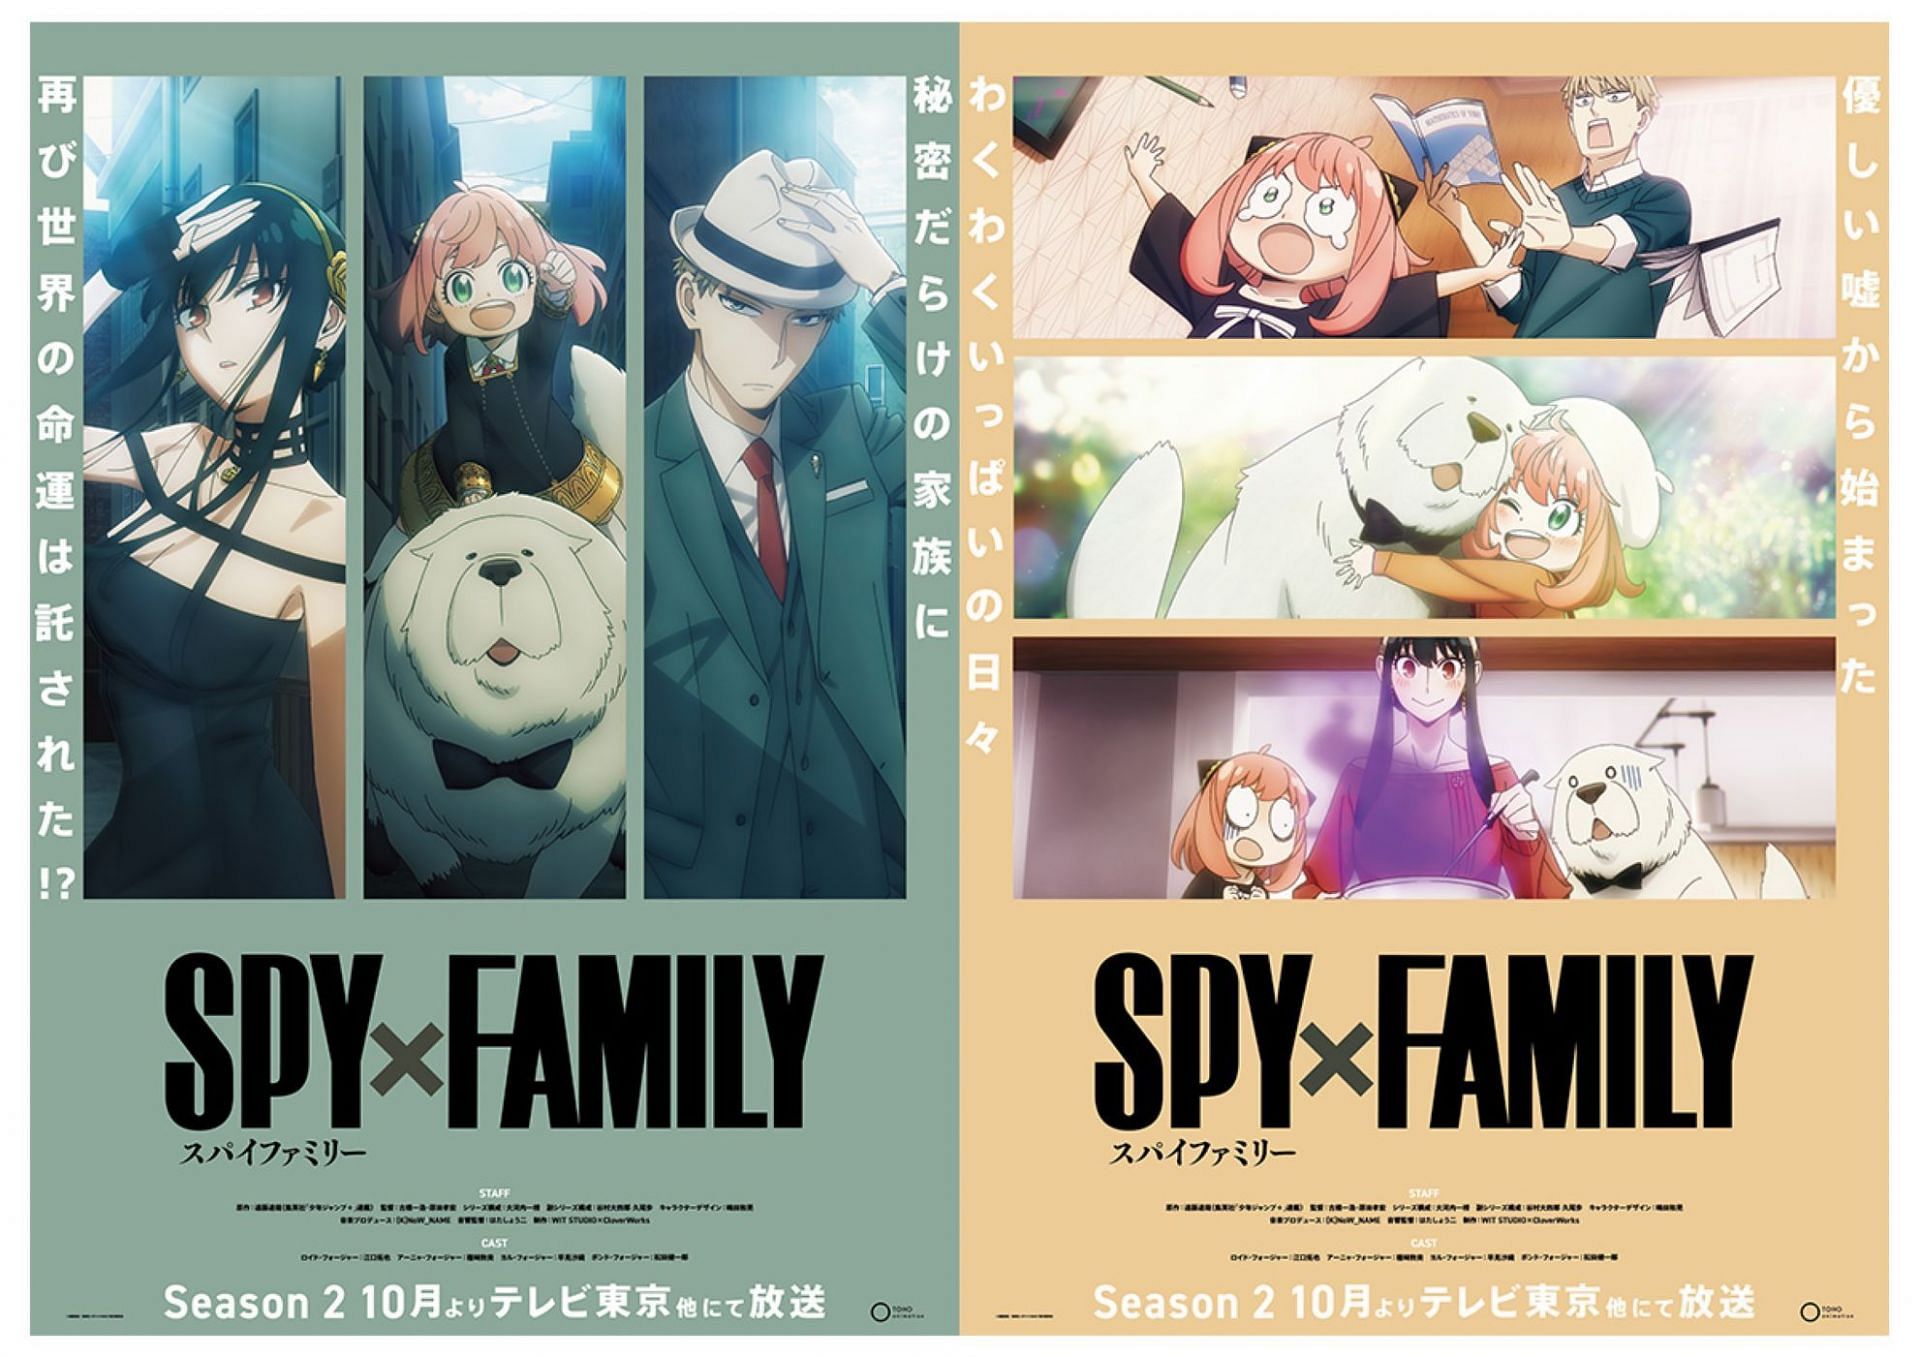 Spy x Family Season 2 Announced; Release Date - Korruption Studios